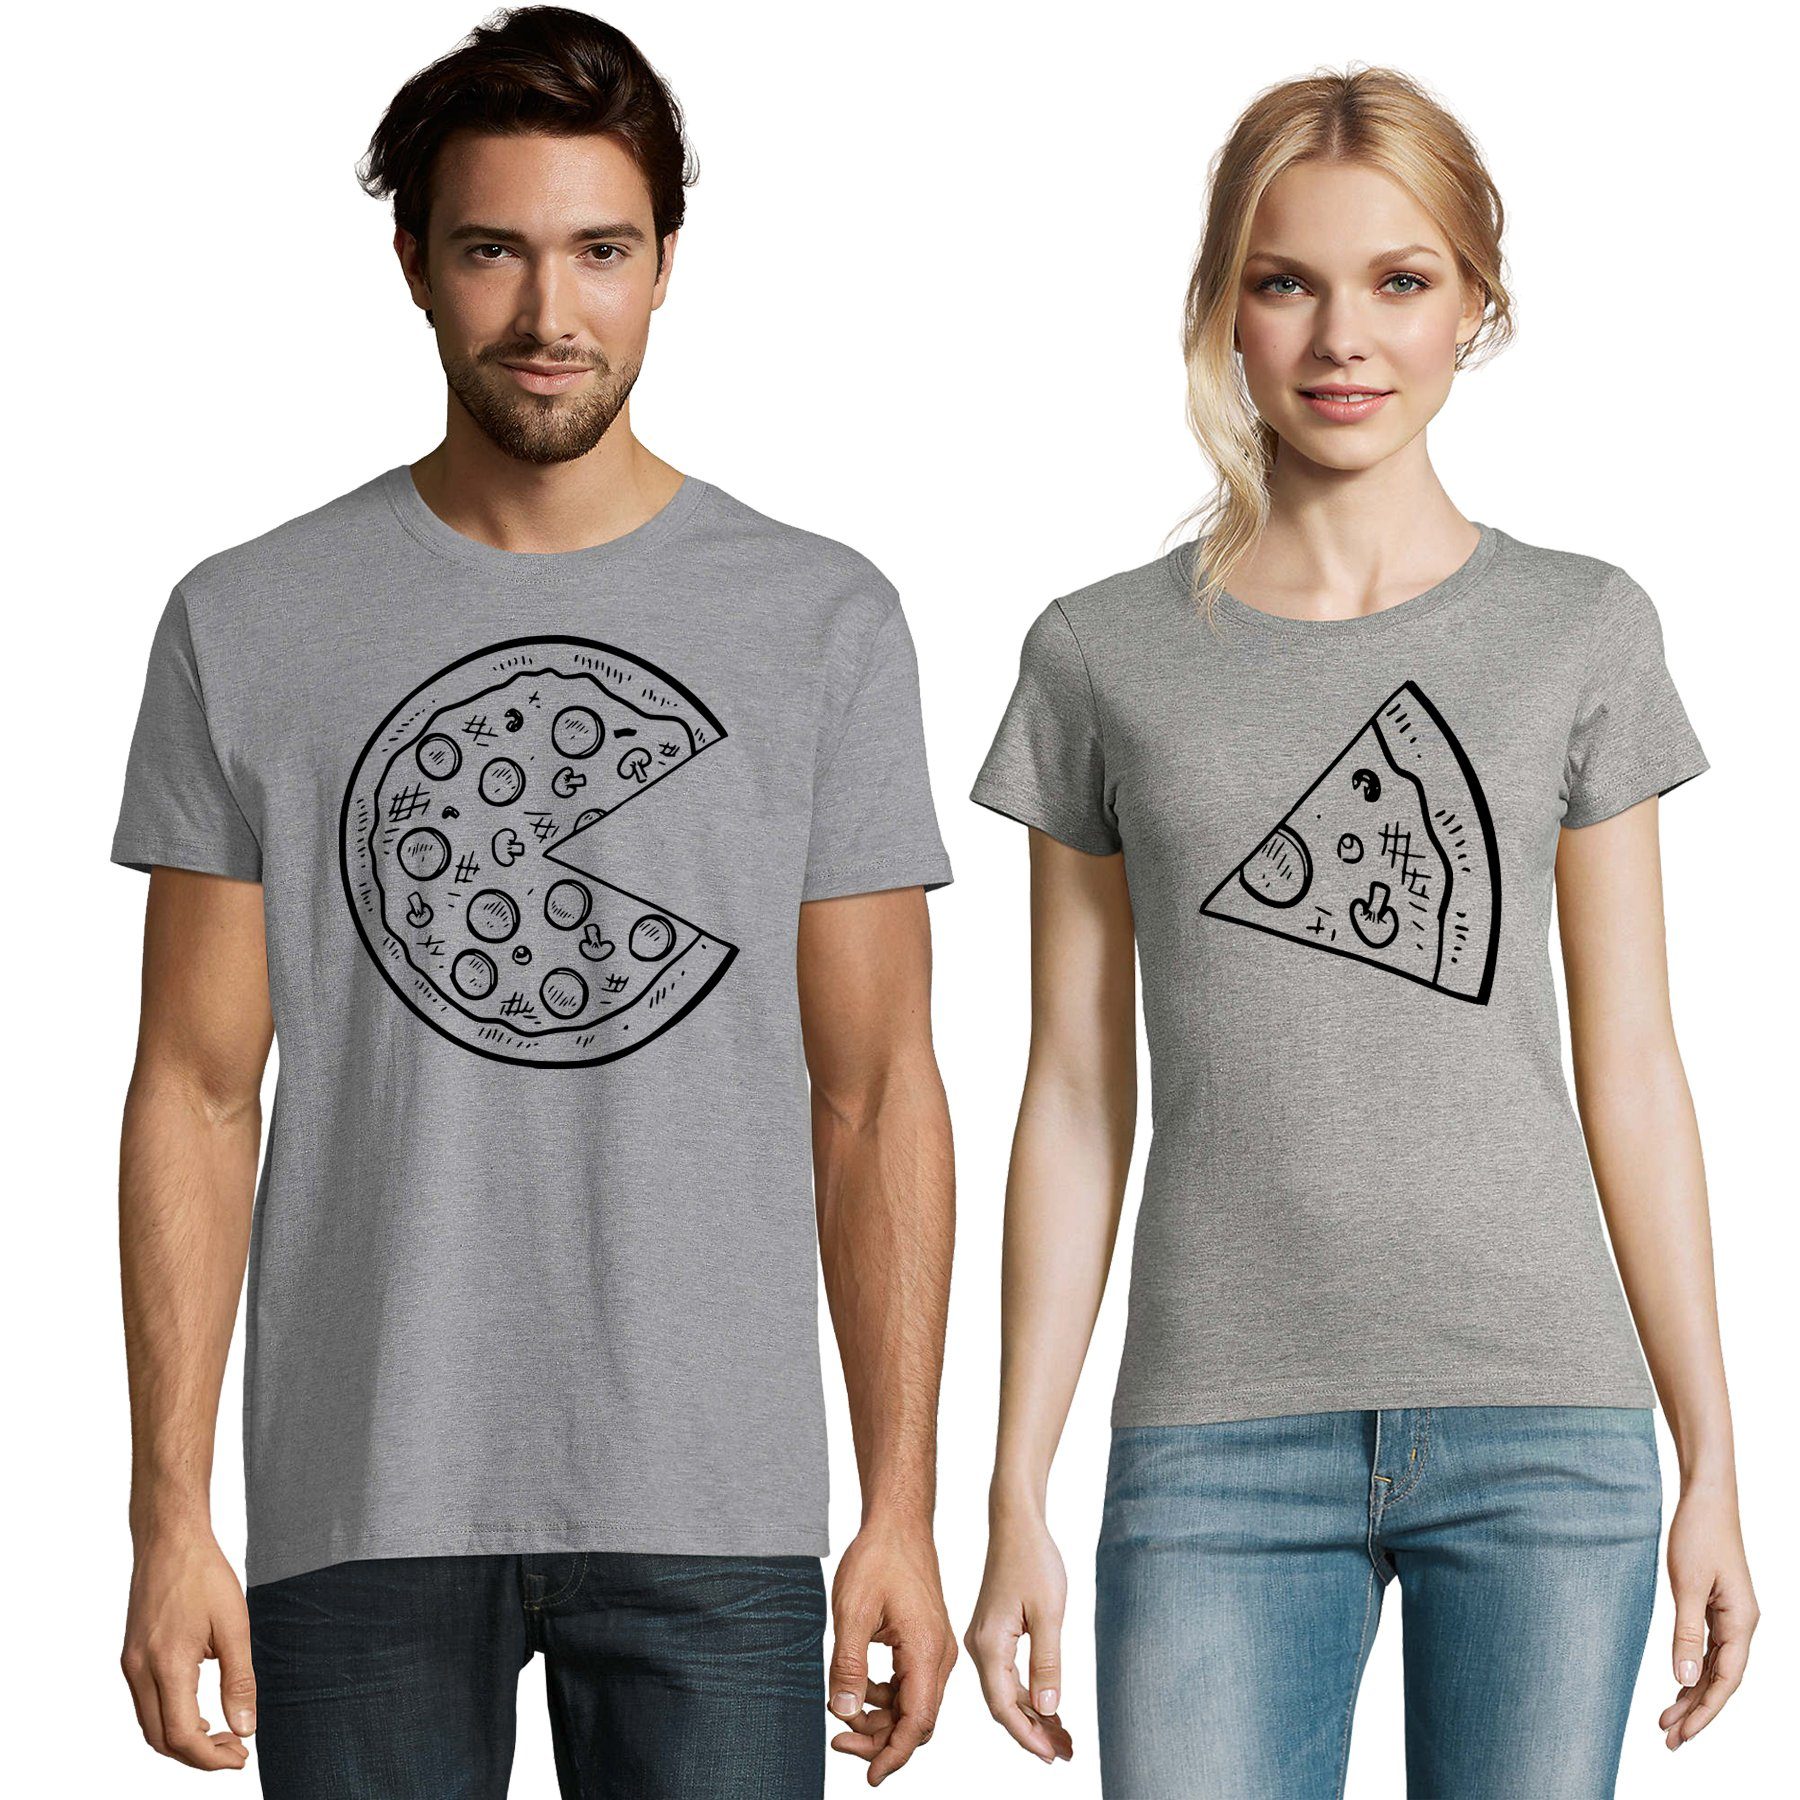 T-Shirt Shirt Pizza Pärchen Damen Friends Partner & BFF Valentin Brownie Blondie Grau Stück